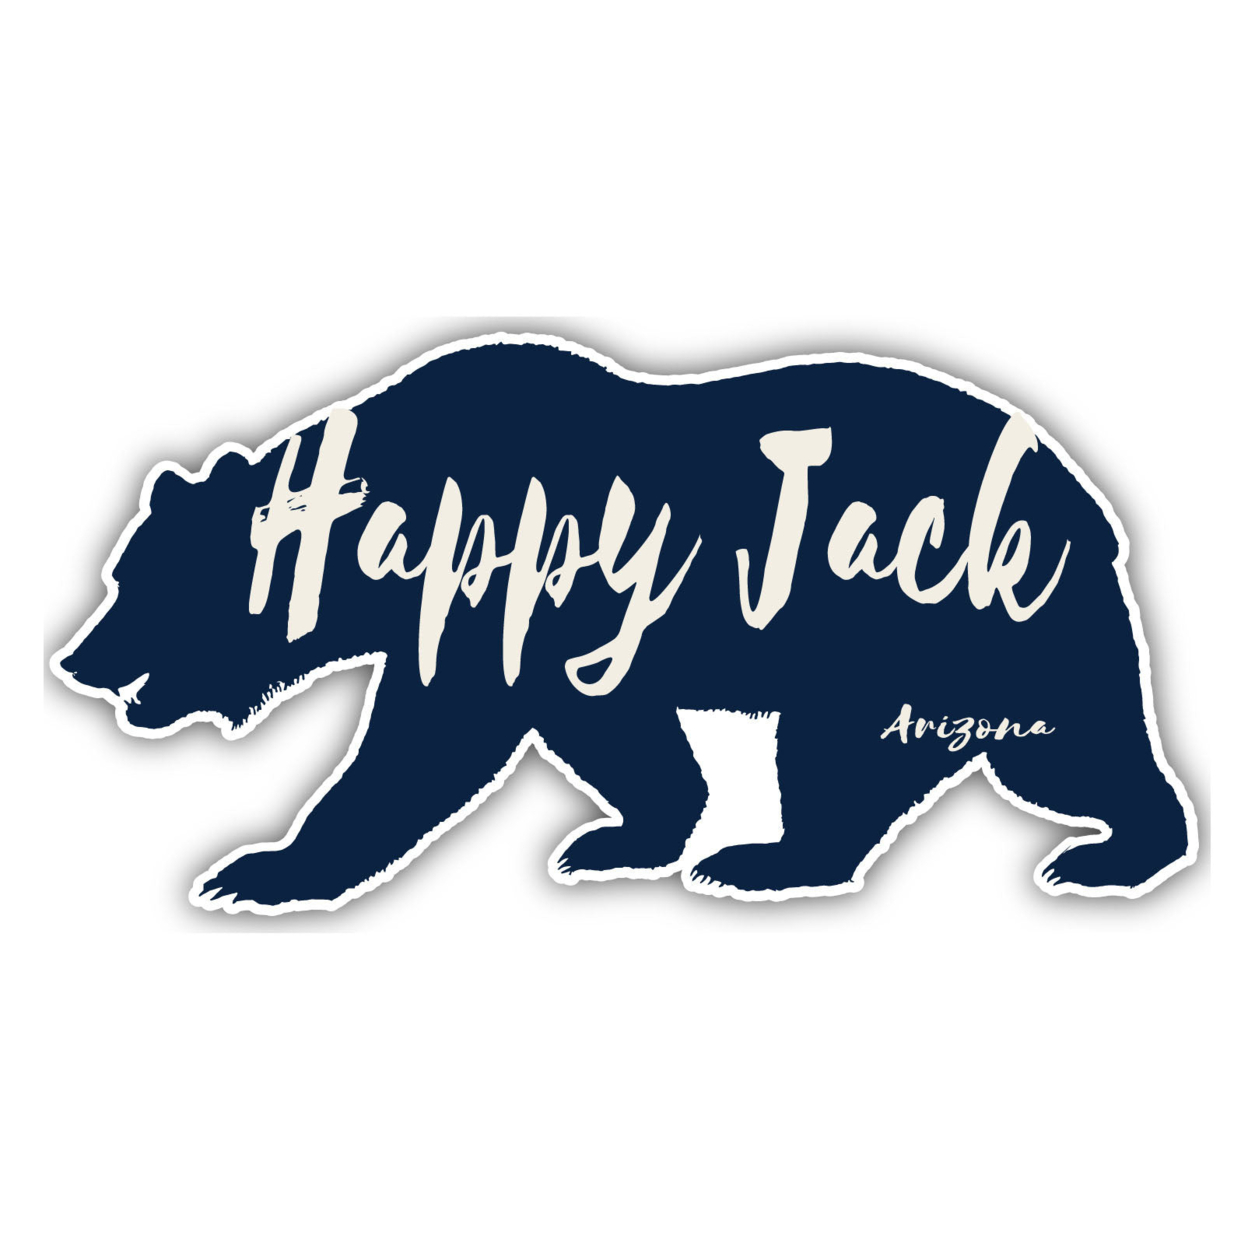 Happy Jack Arizona Souvenir Decorative Stickers (Choose Theme And Size) - 4-Pack, 12-Inch, Tent